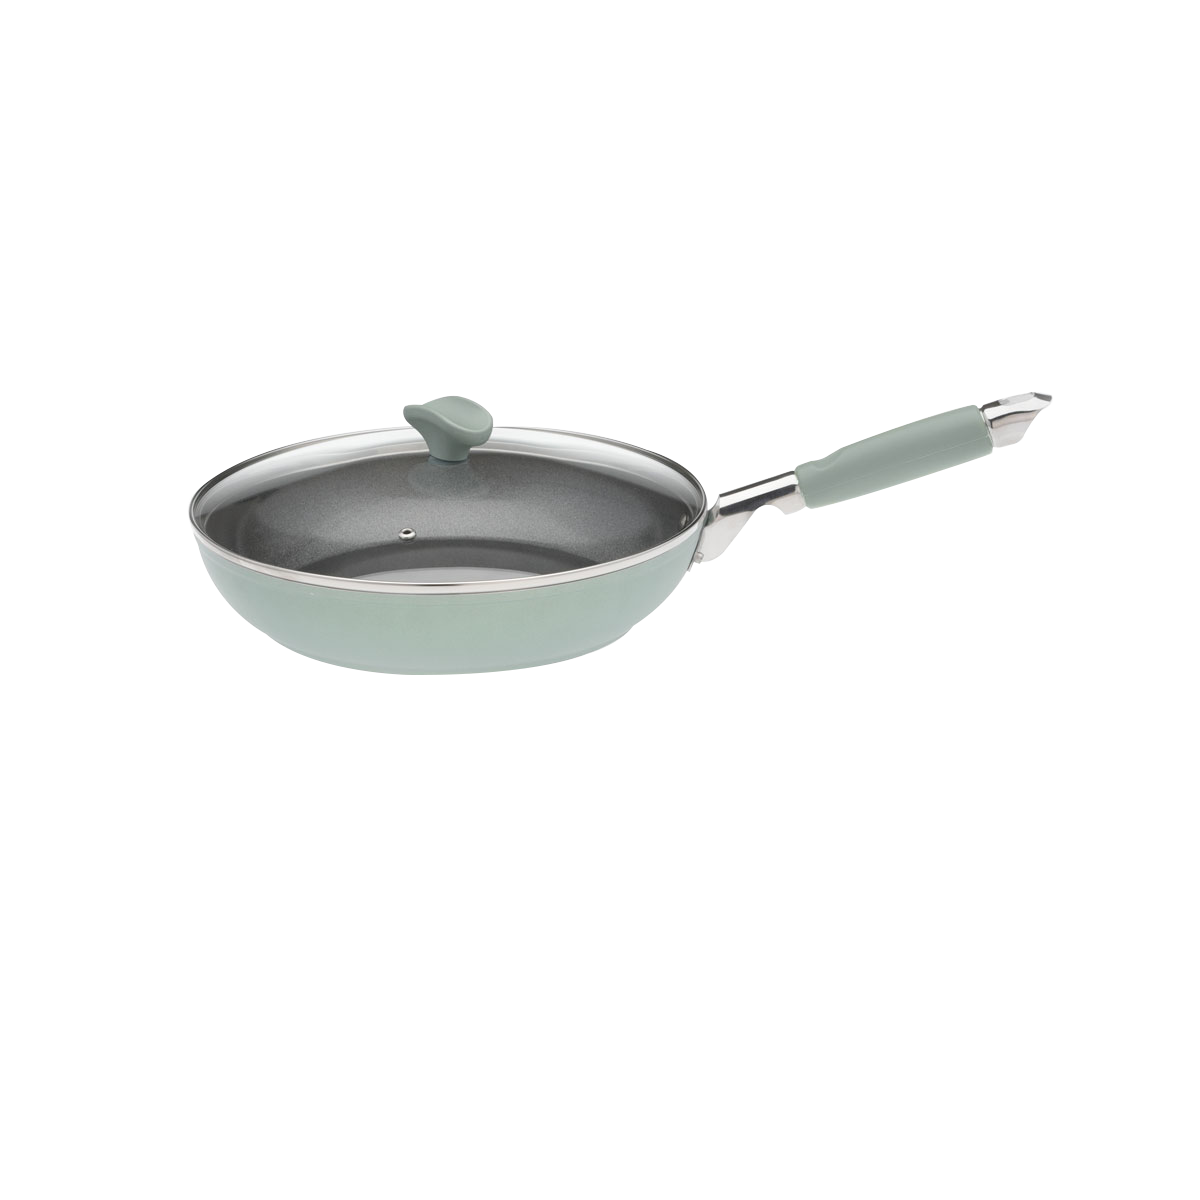  11 Nonstick Frying Pan with Lid - 11 Inch Nonstick